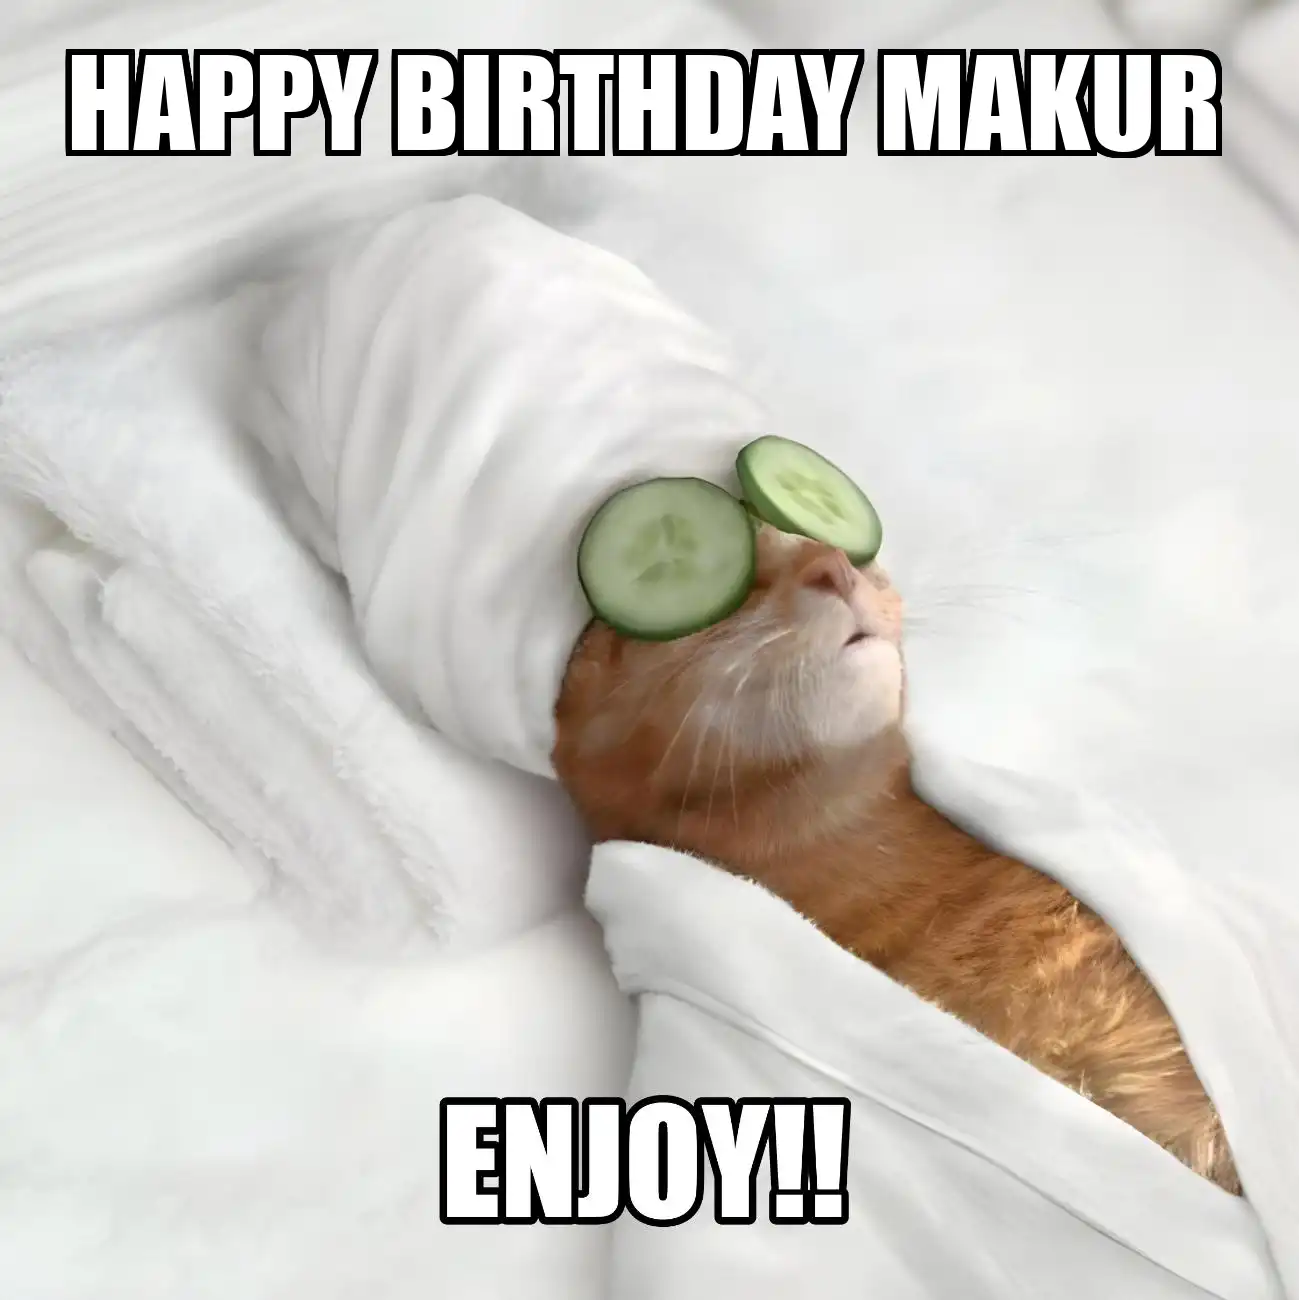 Happy Birthday Makur Enjoy Cat Meme